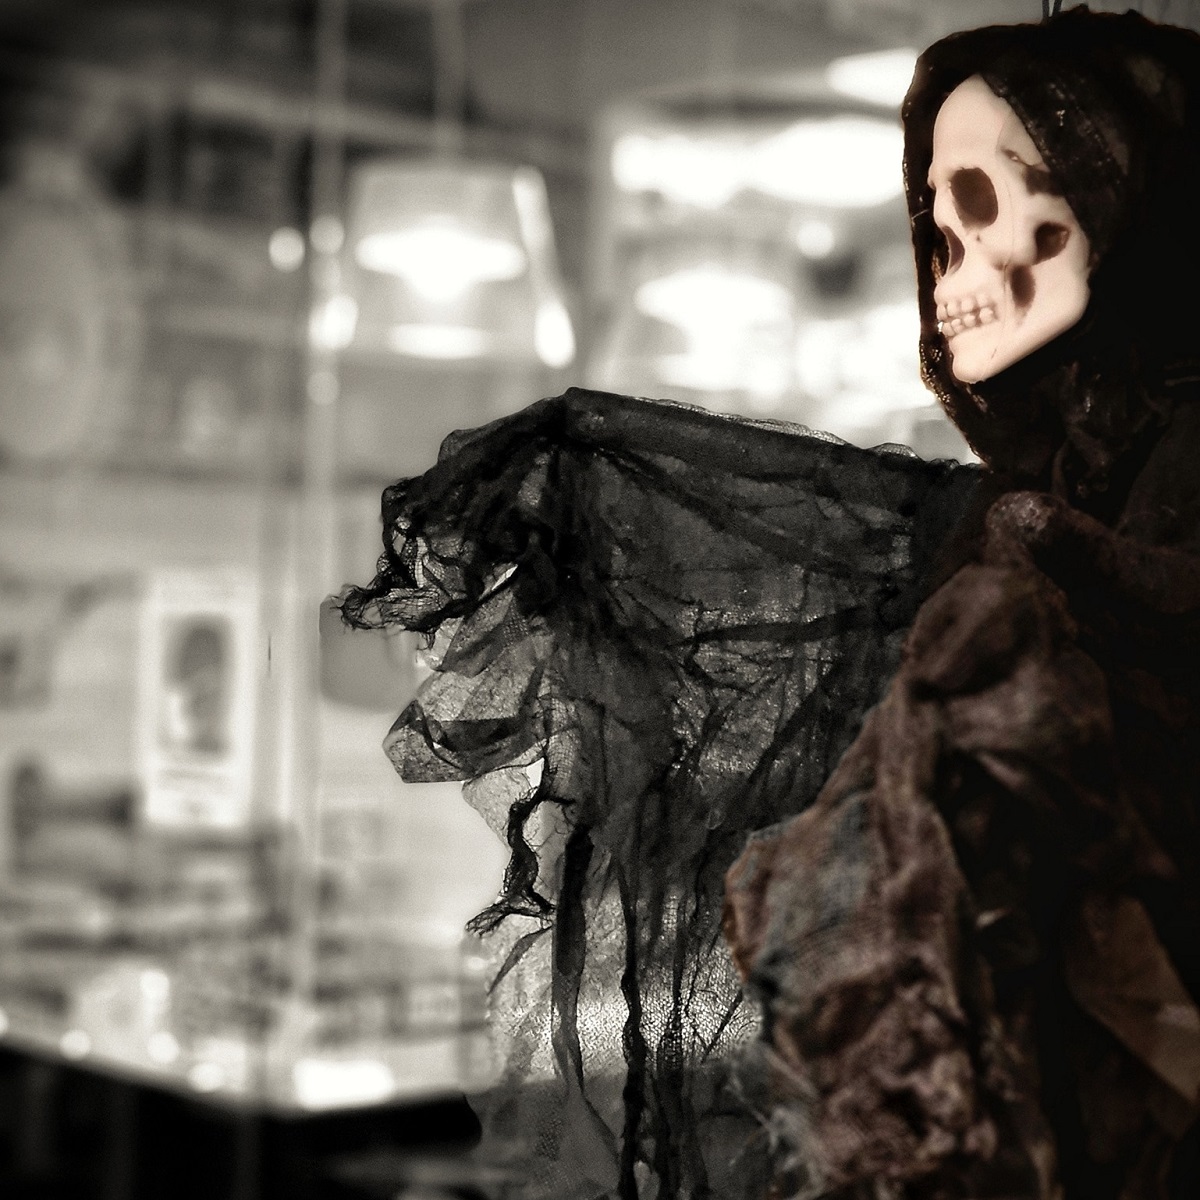 schelet imbracat cu o haina neagra, fotografiat din profil